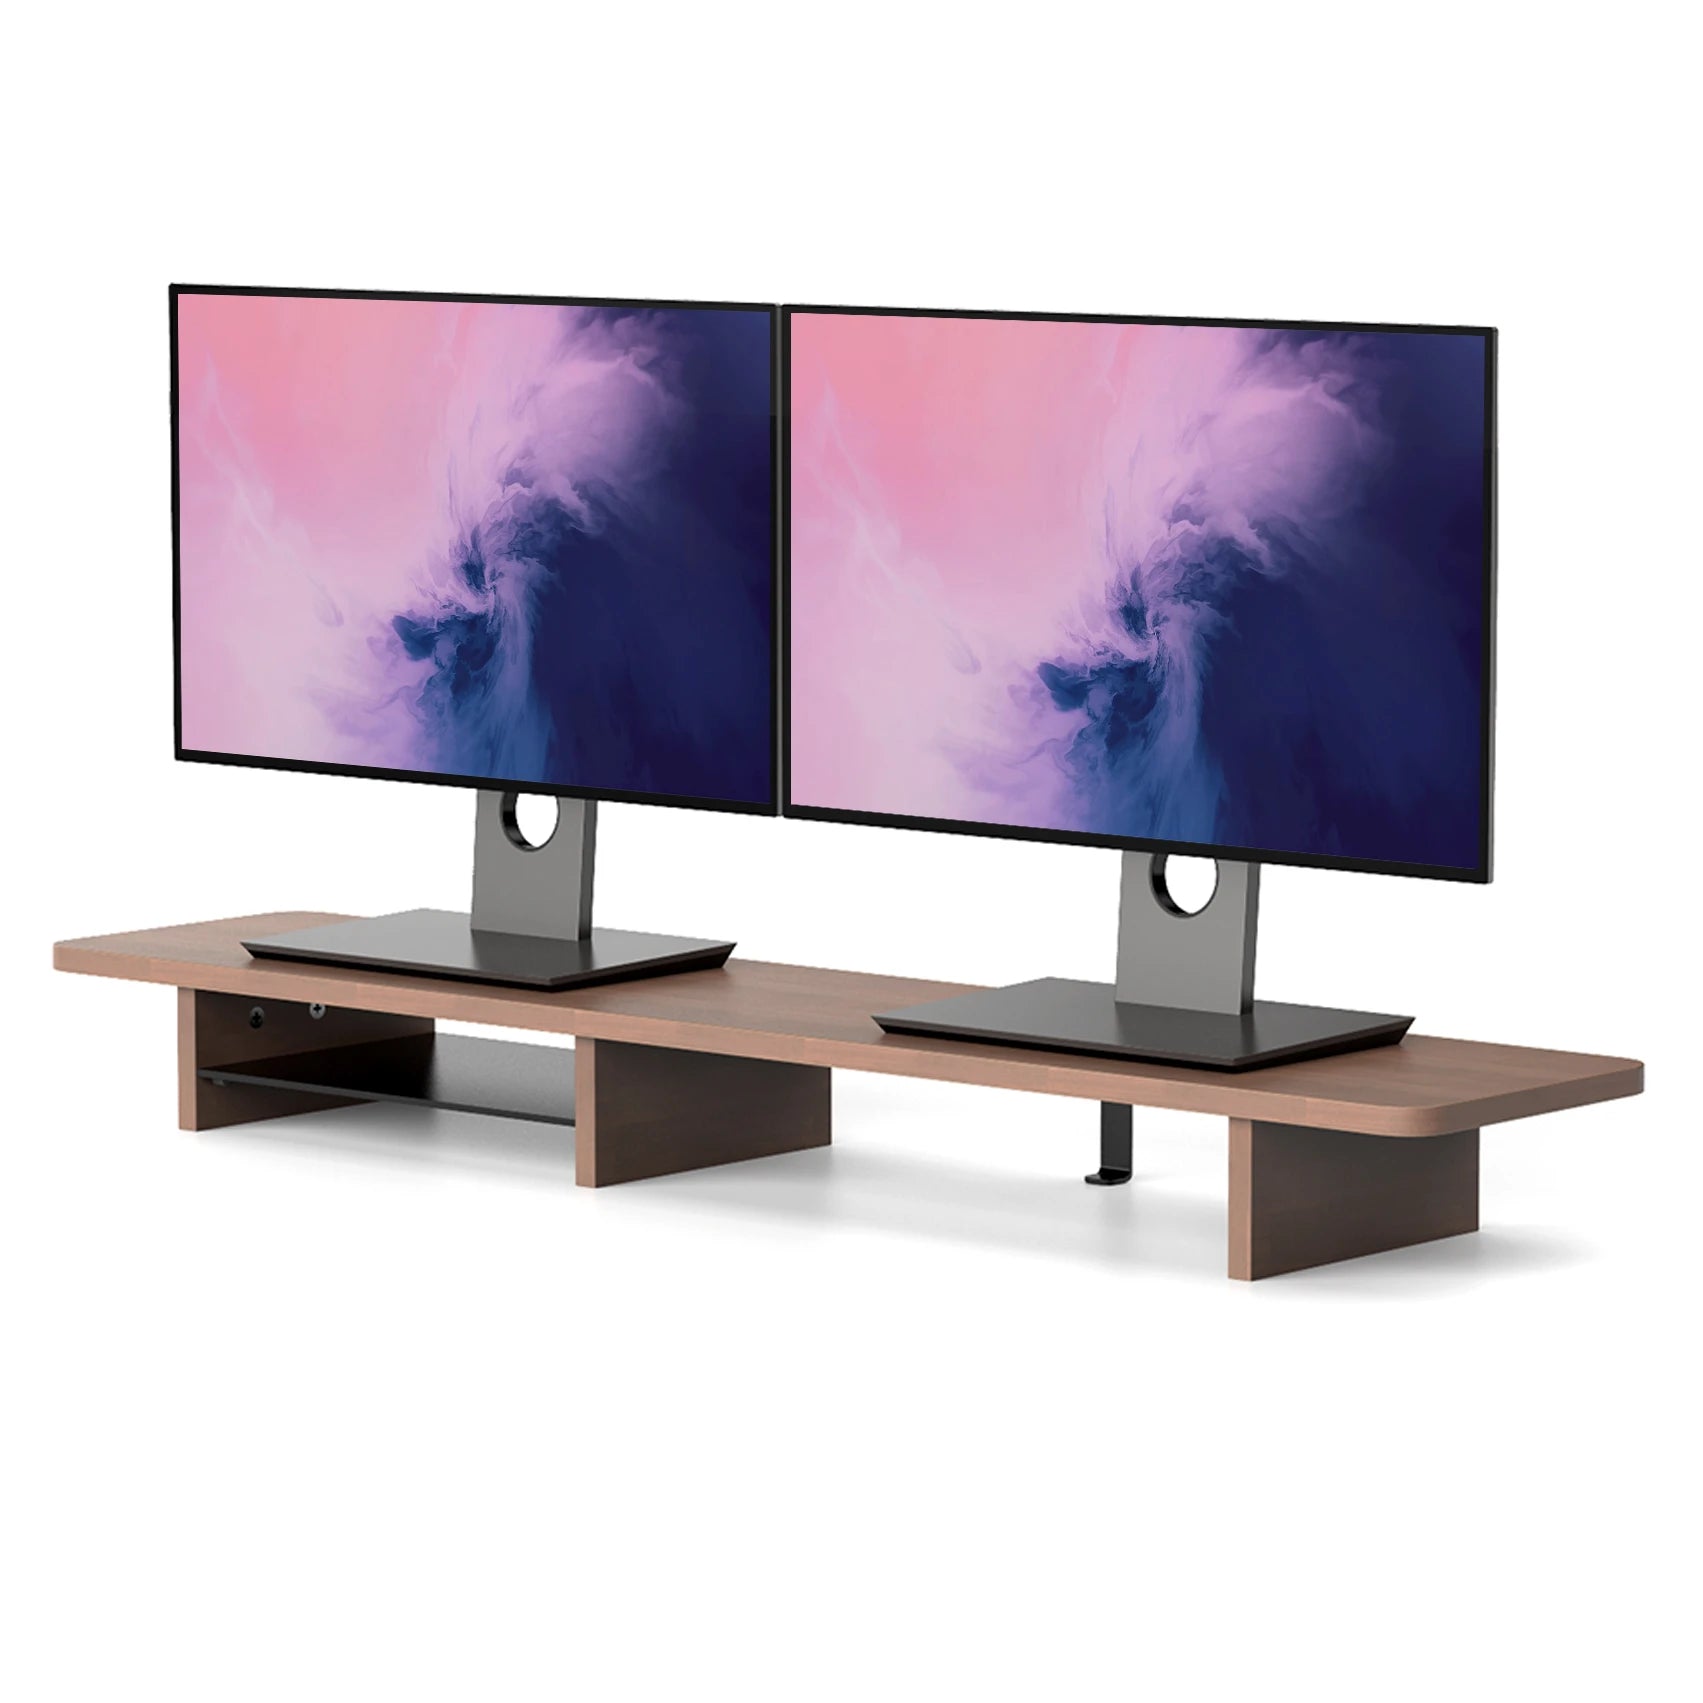 Dual-display élever Pro Ergonomic Monitor Riser in stylish wood design, enhancing screen height for improved ergonomics and desk organization.